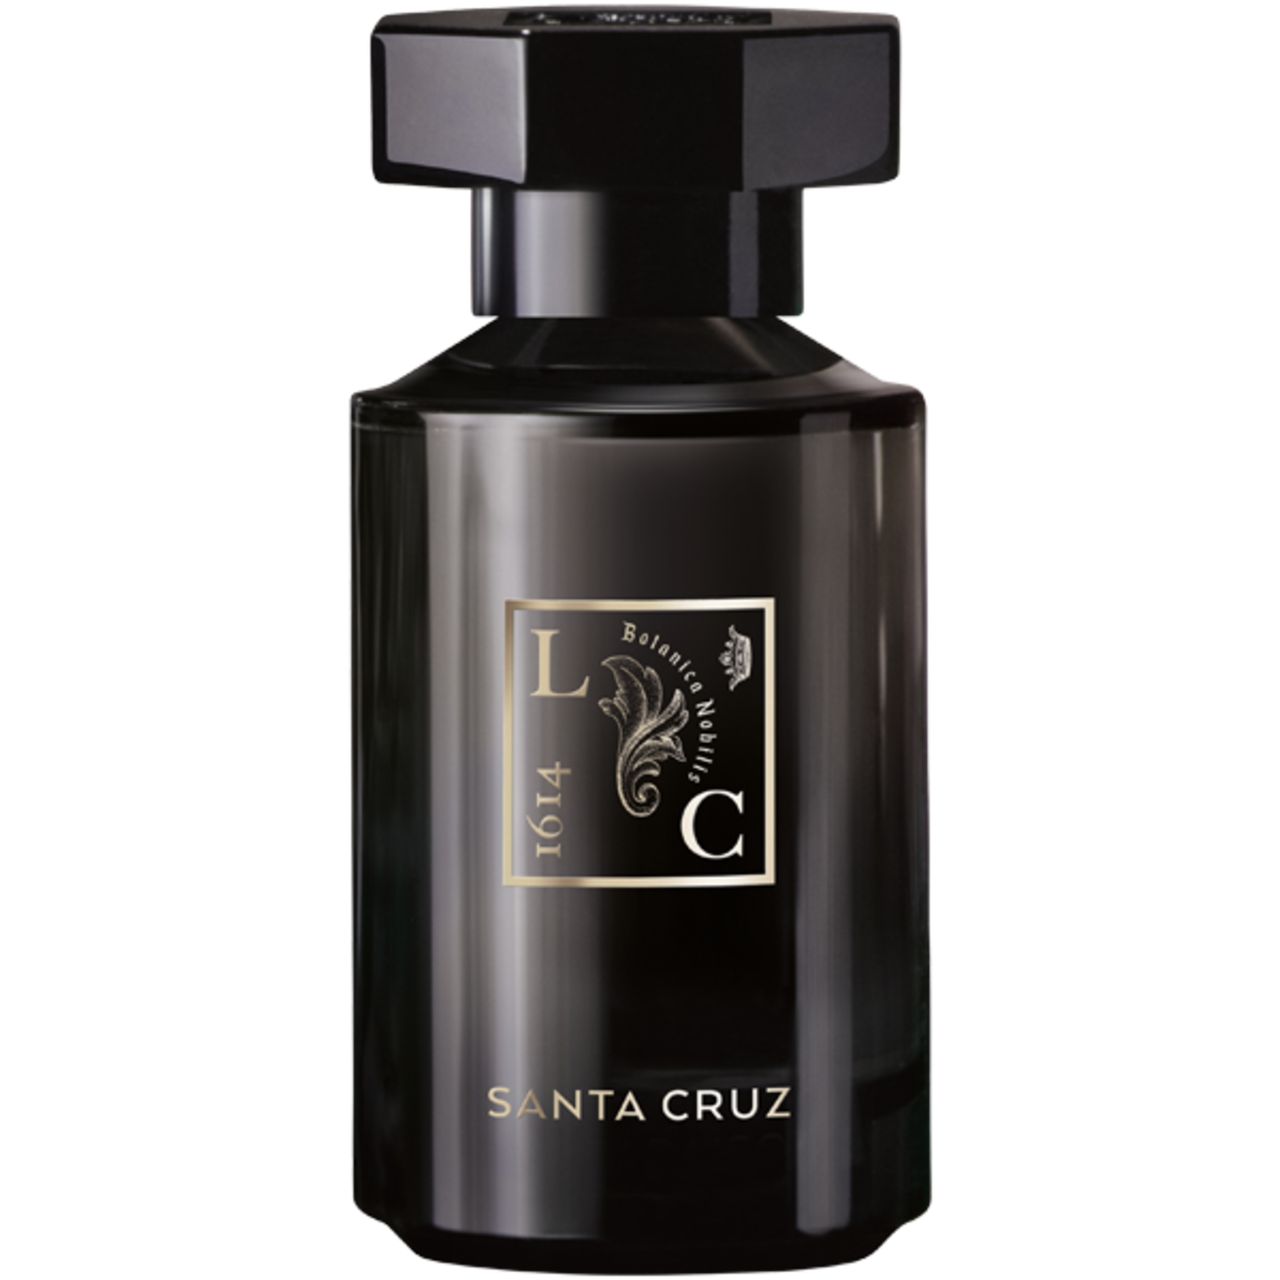 Remarquable Santa Cruz Eau de Parfum 50 ml